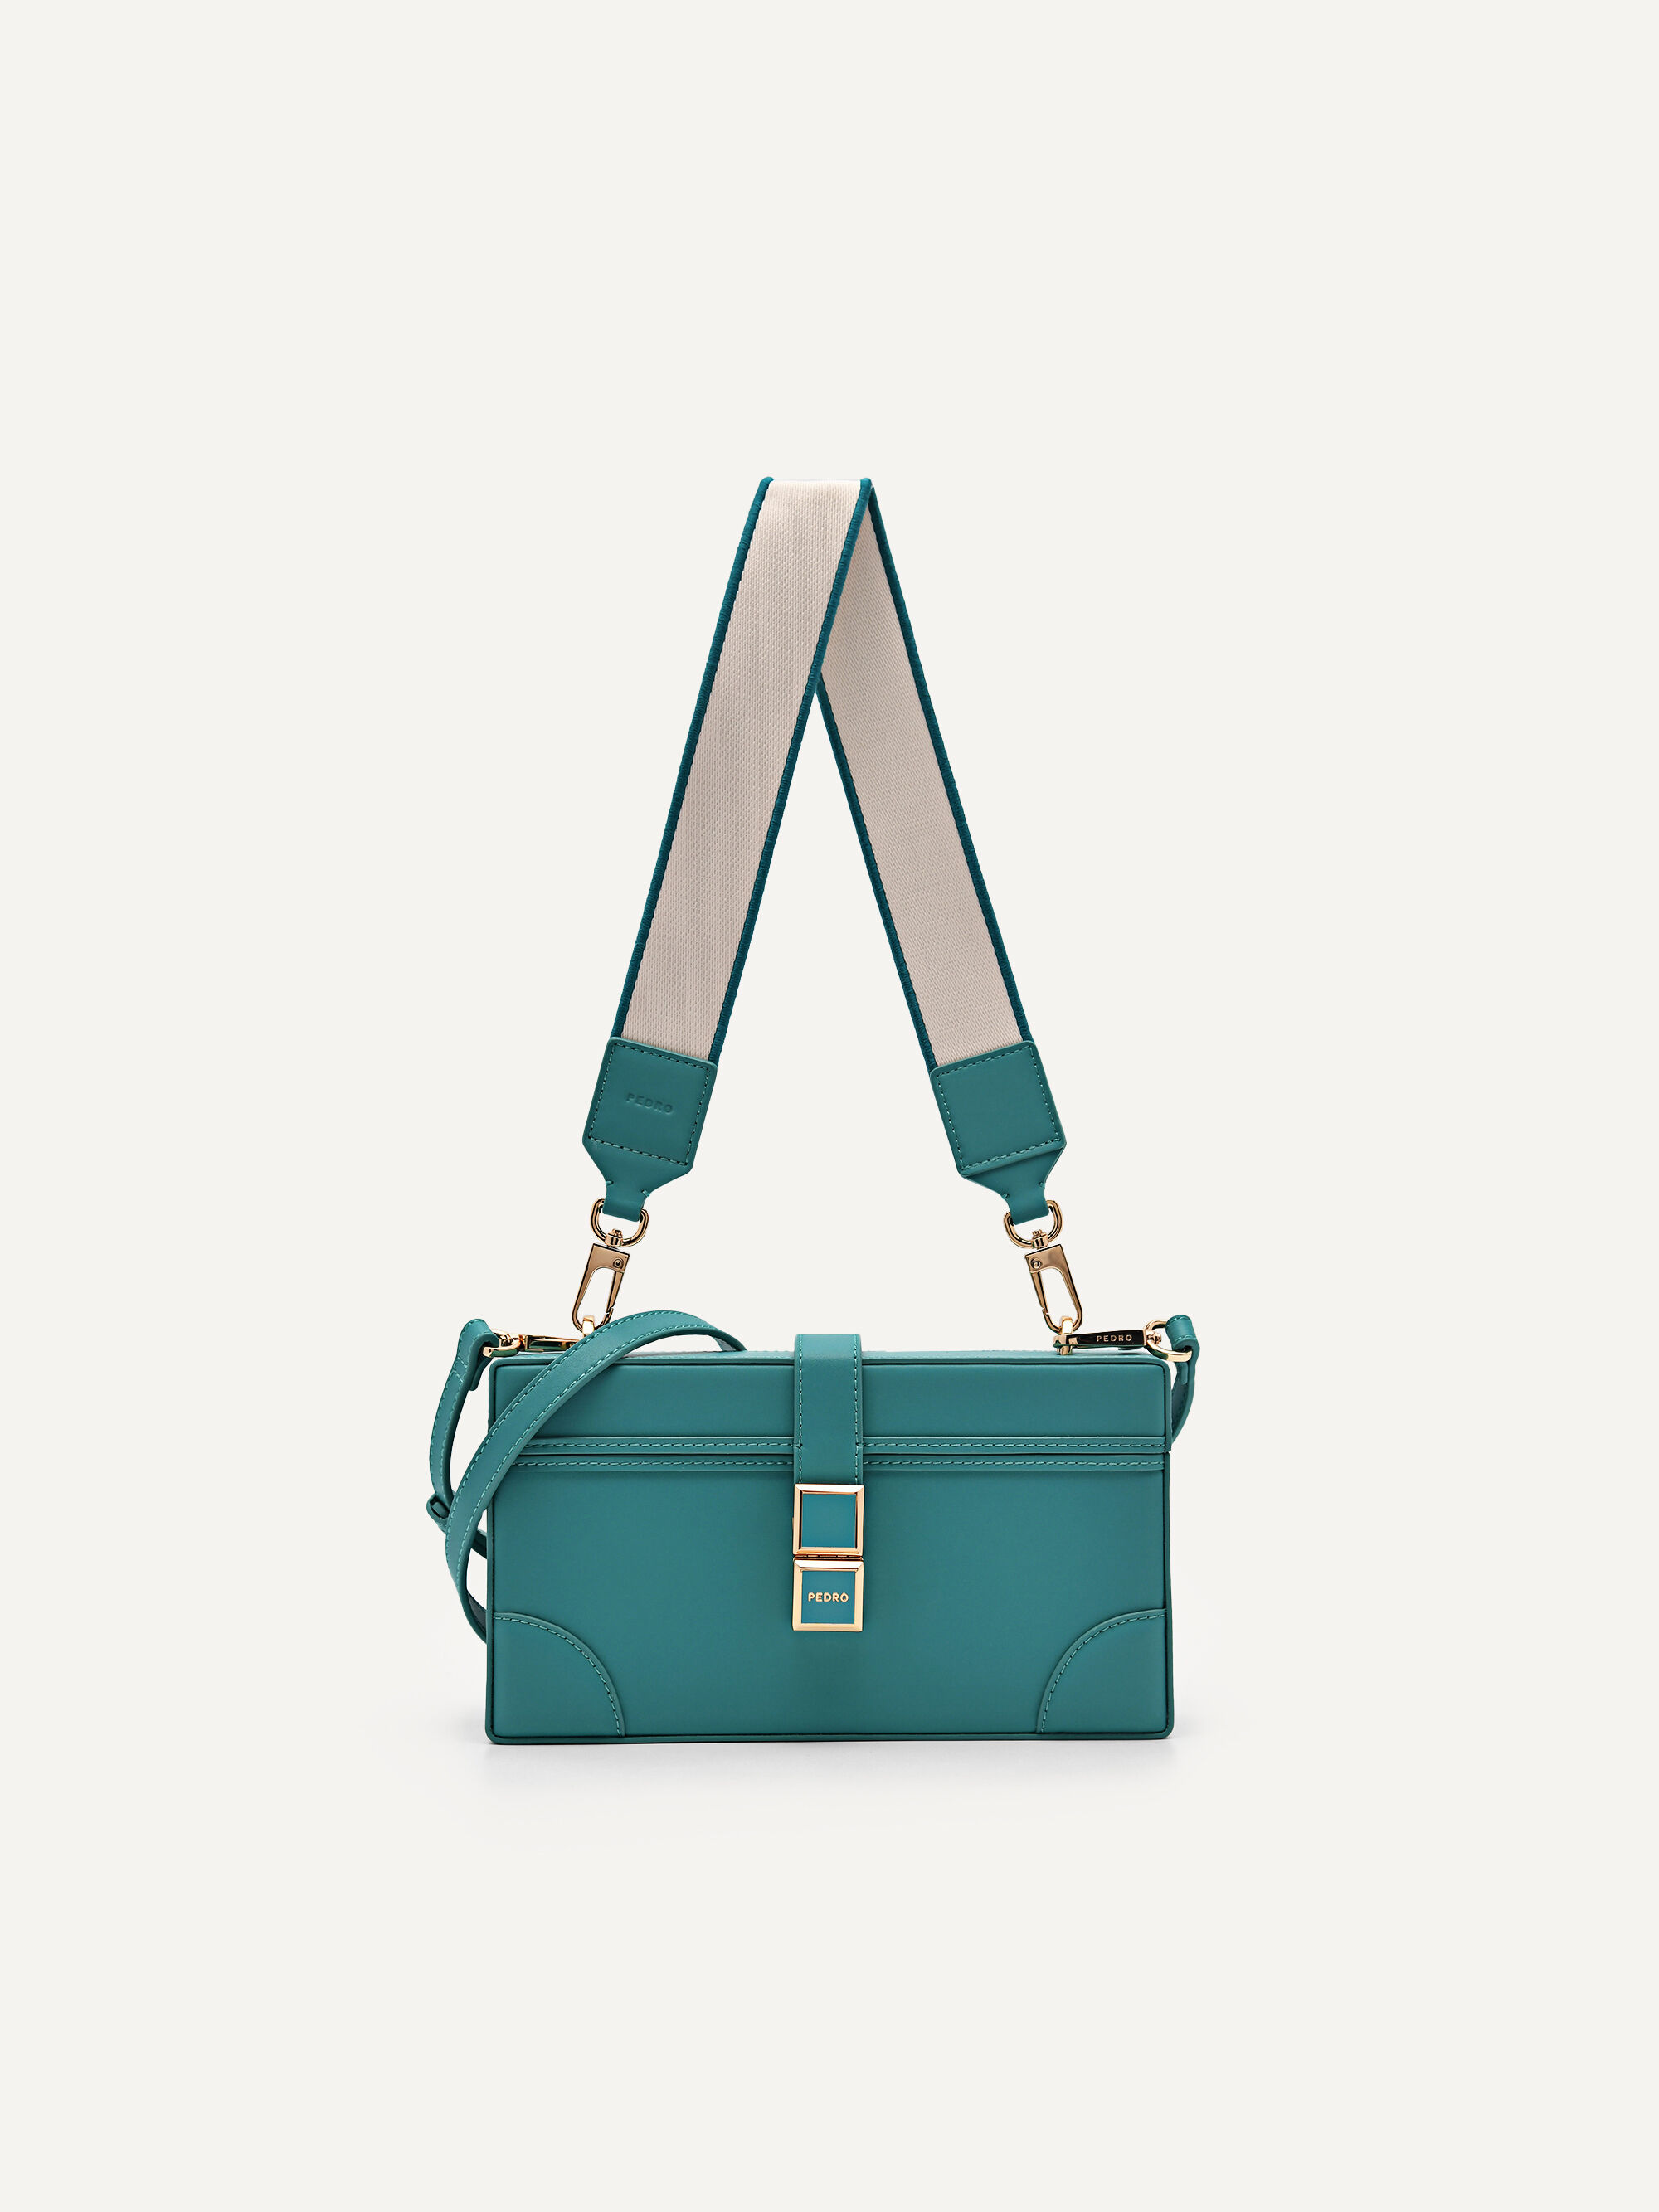 Designer Wide Strap Crossbody Bag – Cute Roar